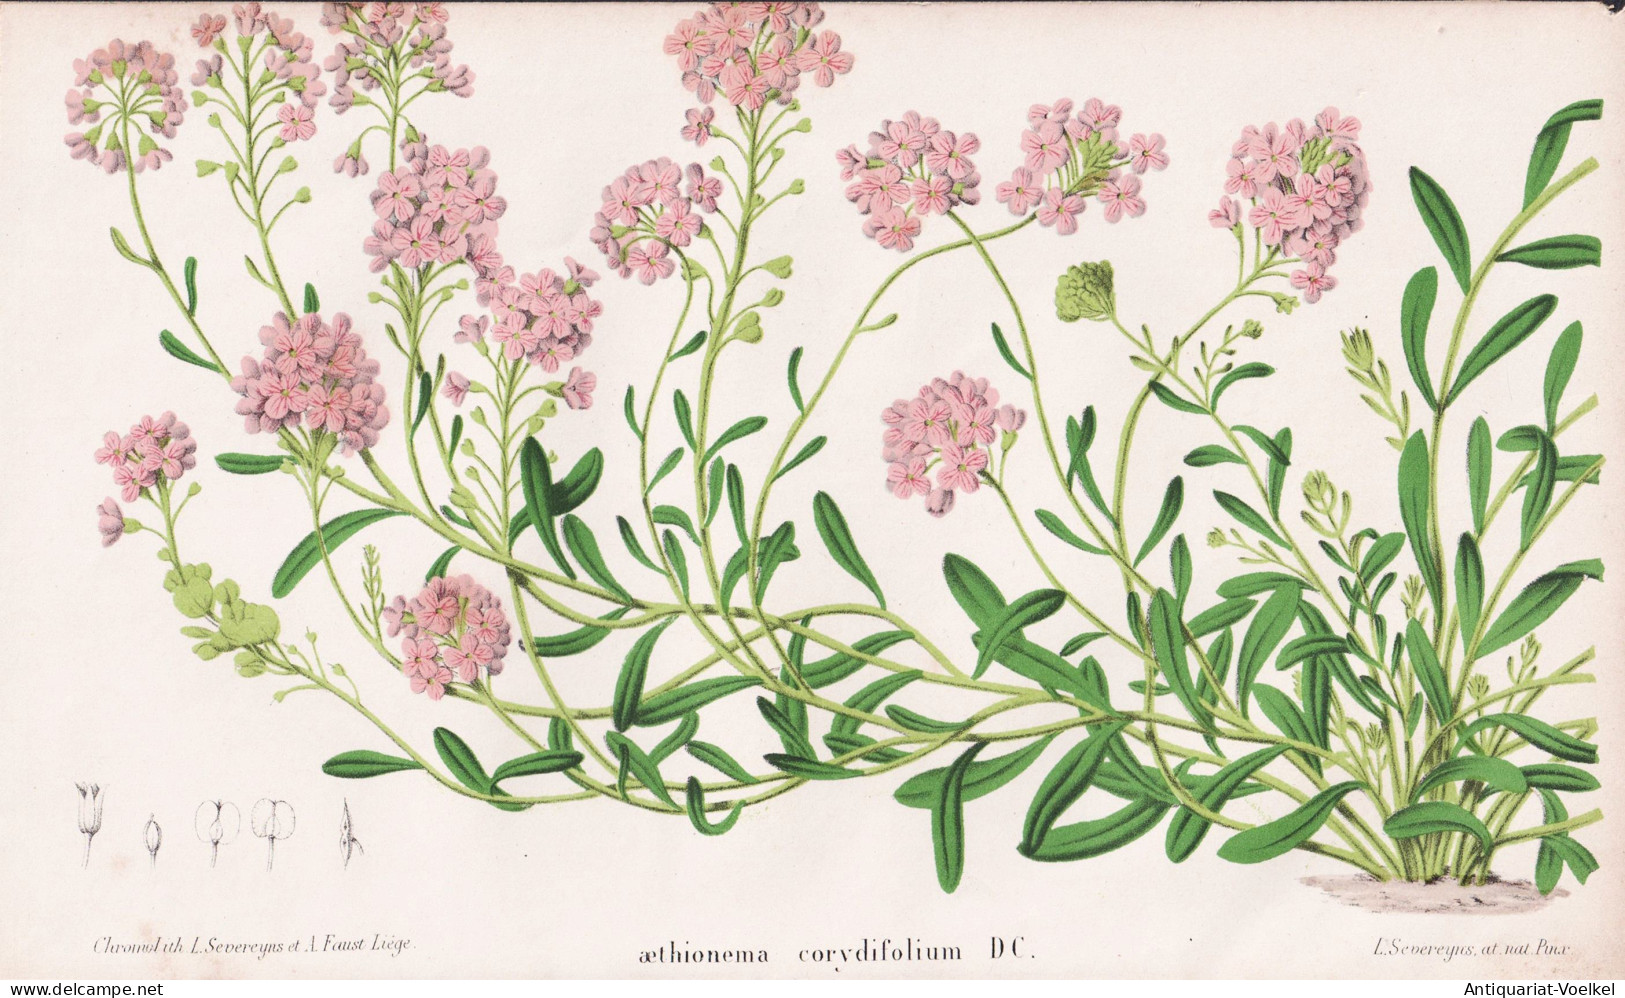 Aethionema Corydifolium DC. - Steintäschel Lebanon / Pflanze Planzen Plant Plants / Flower Flowers Blume Blum - Prints & Engravings